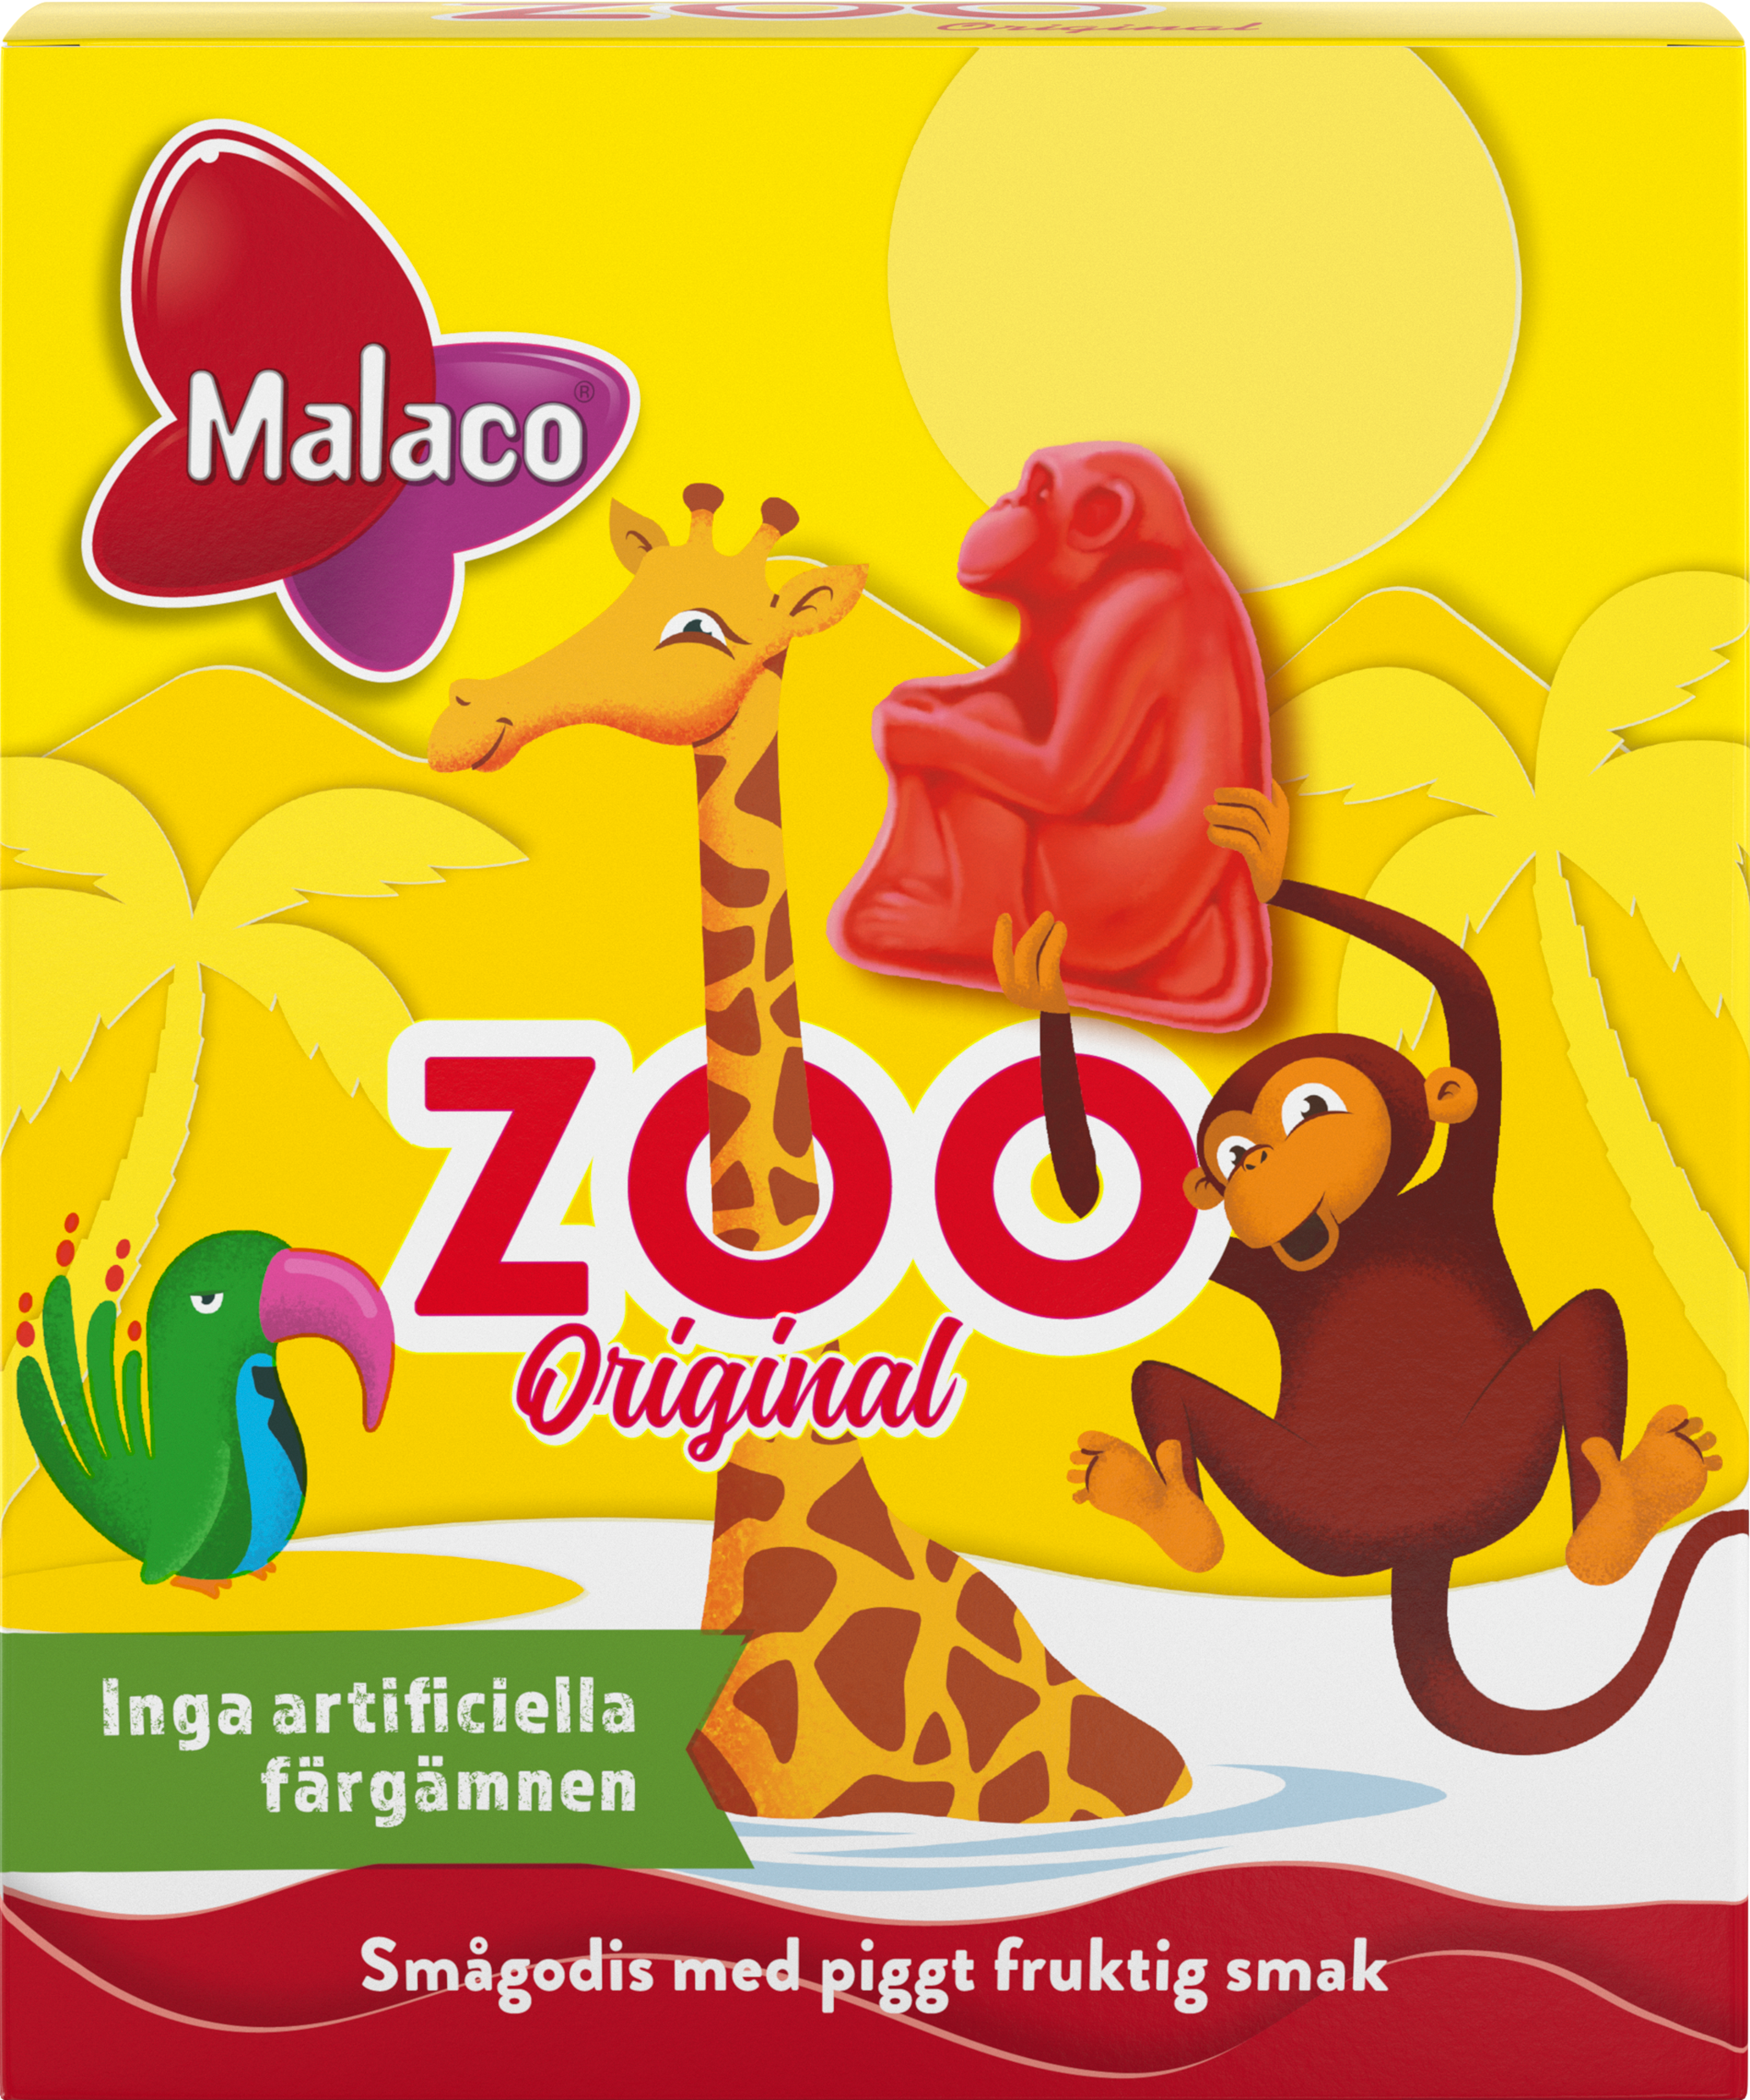 Malaco Pastillas del zoológico by Swedish Candy Store